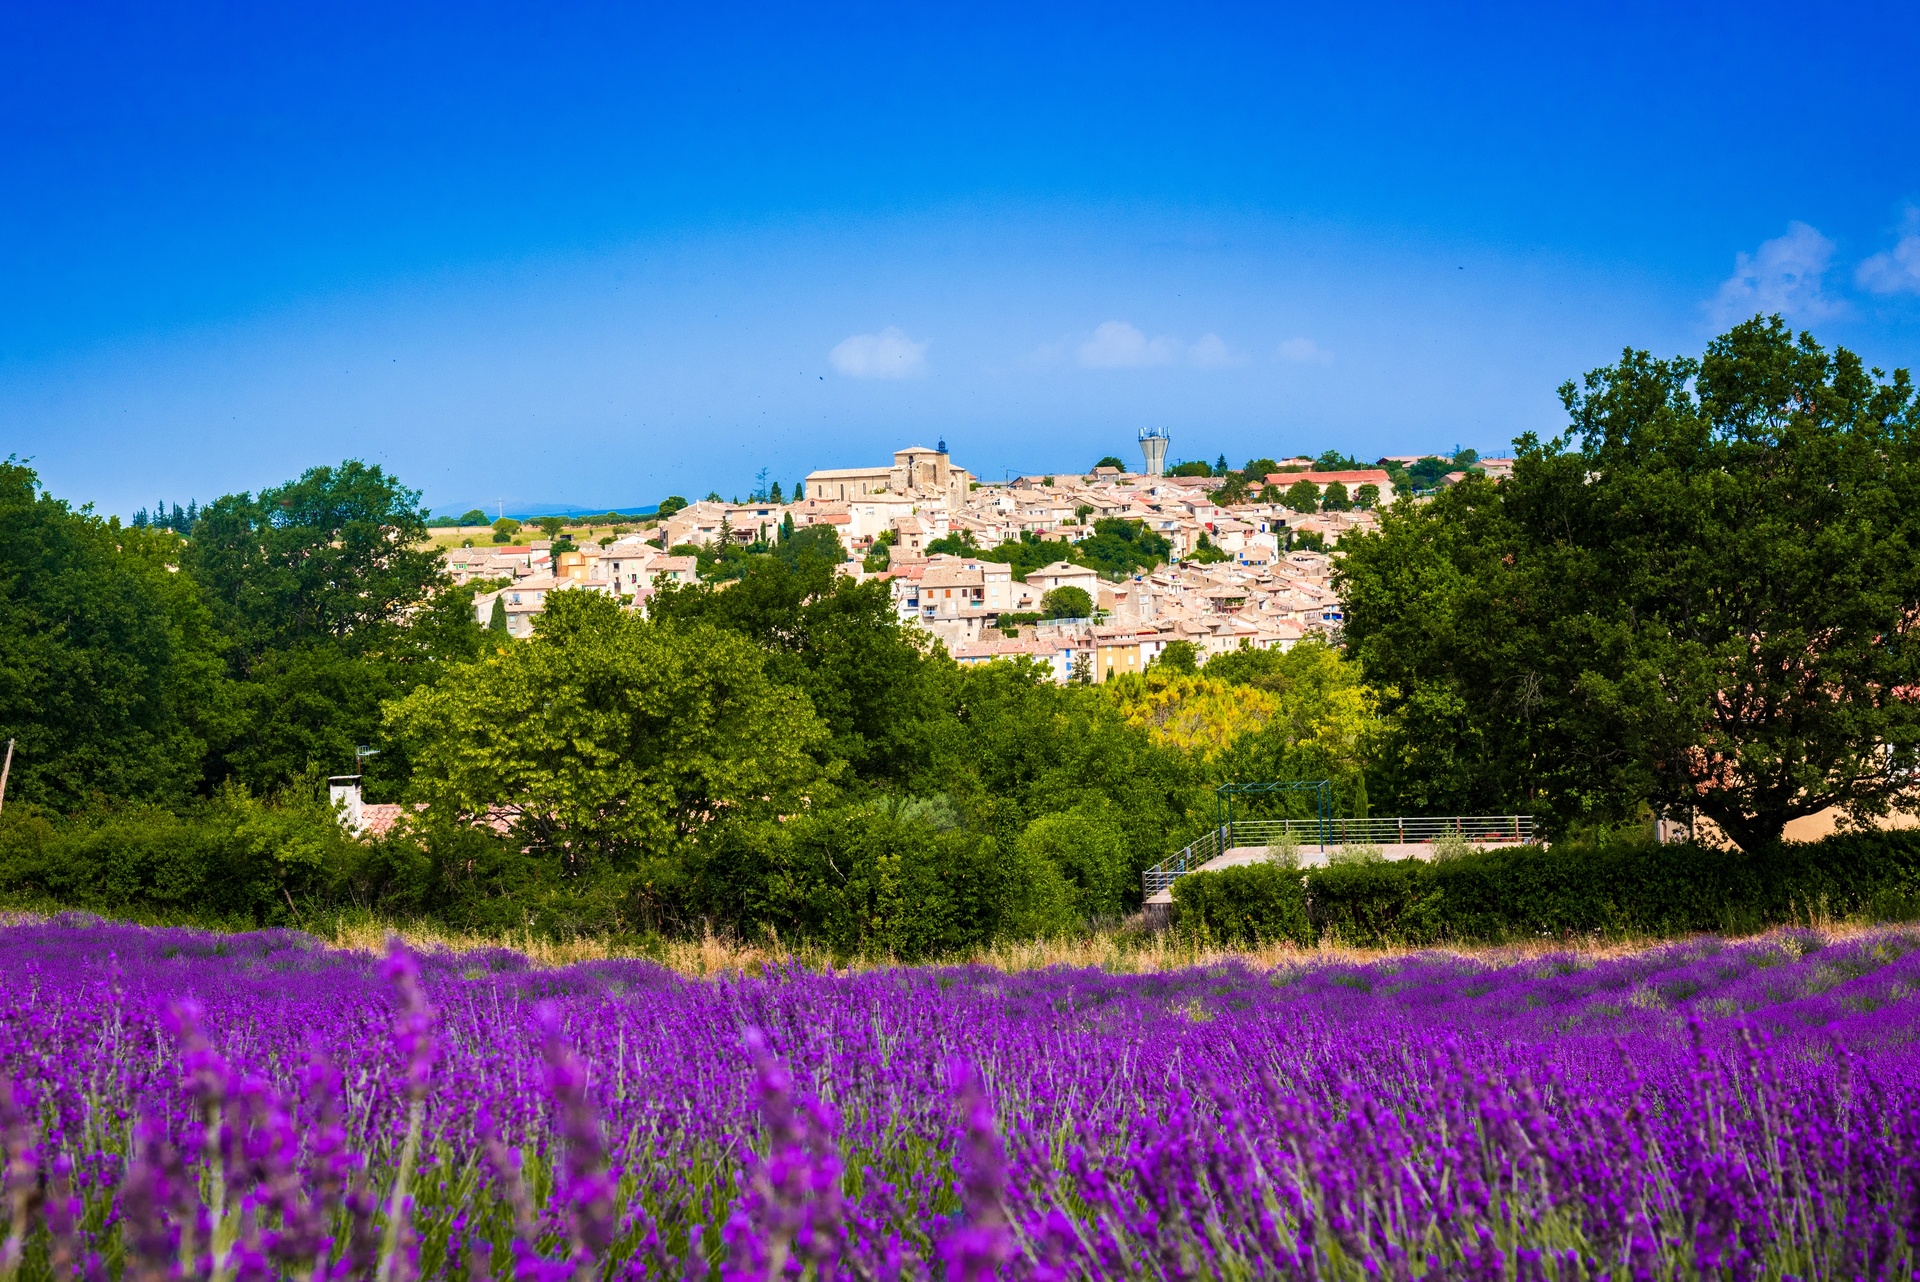 Acheter un camping en Provence, Drôme, Ardèche, Alpes